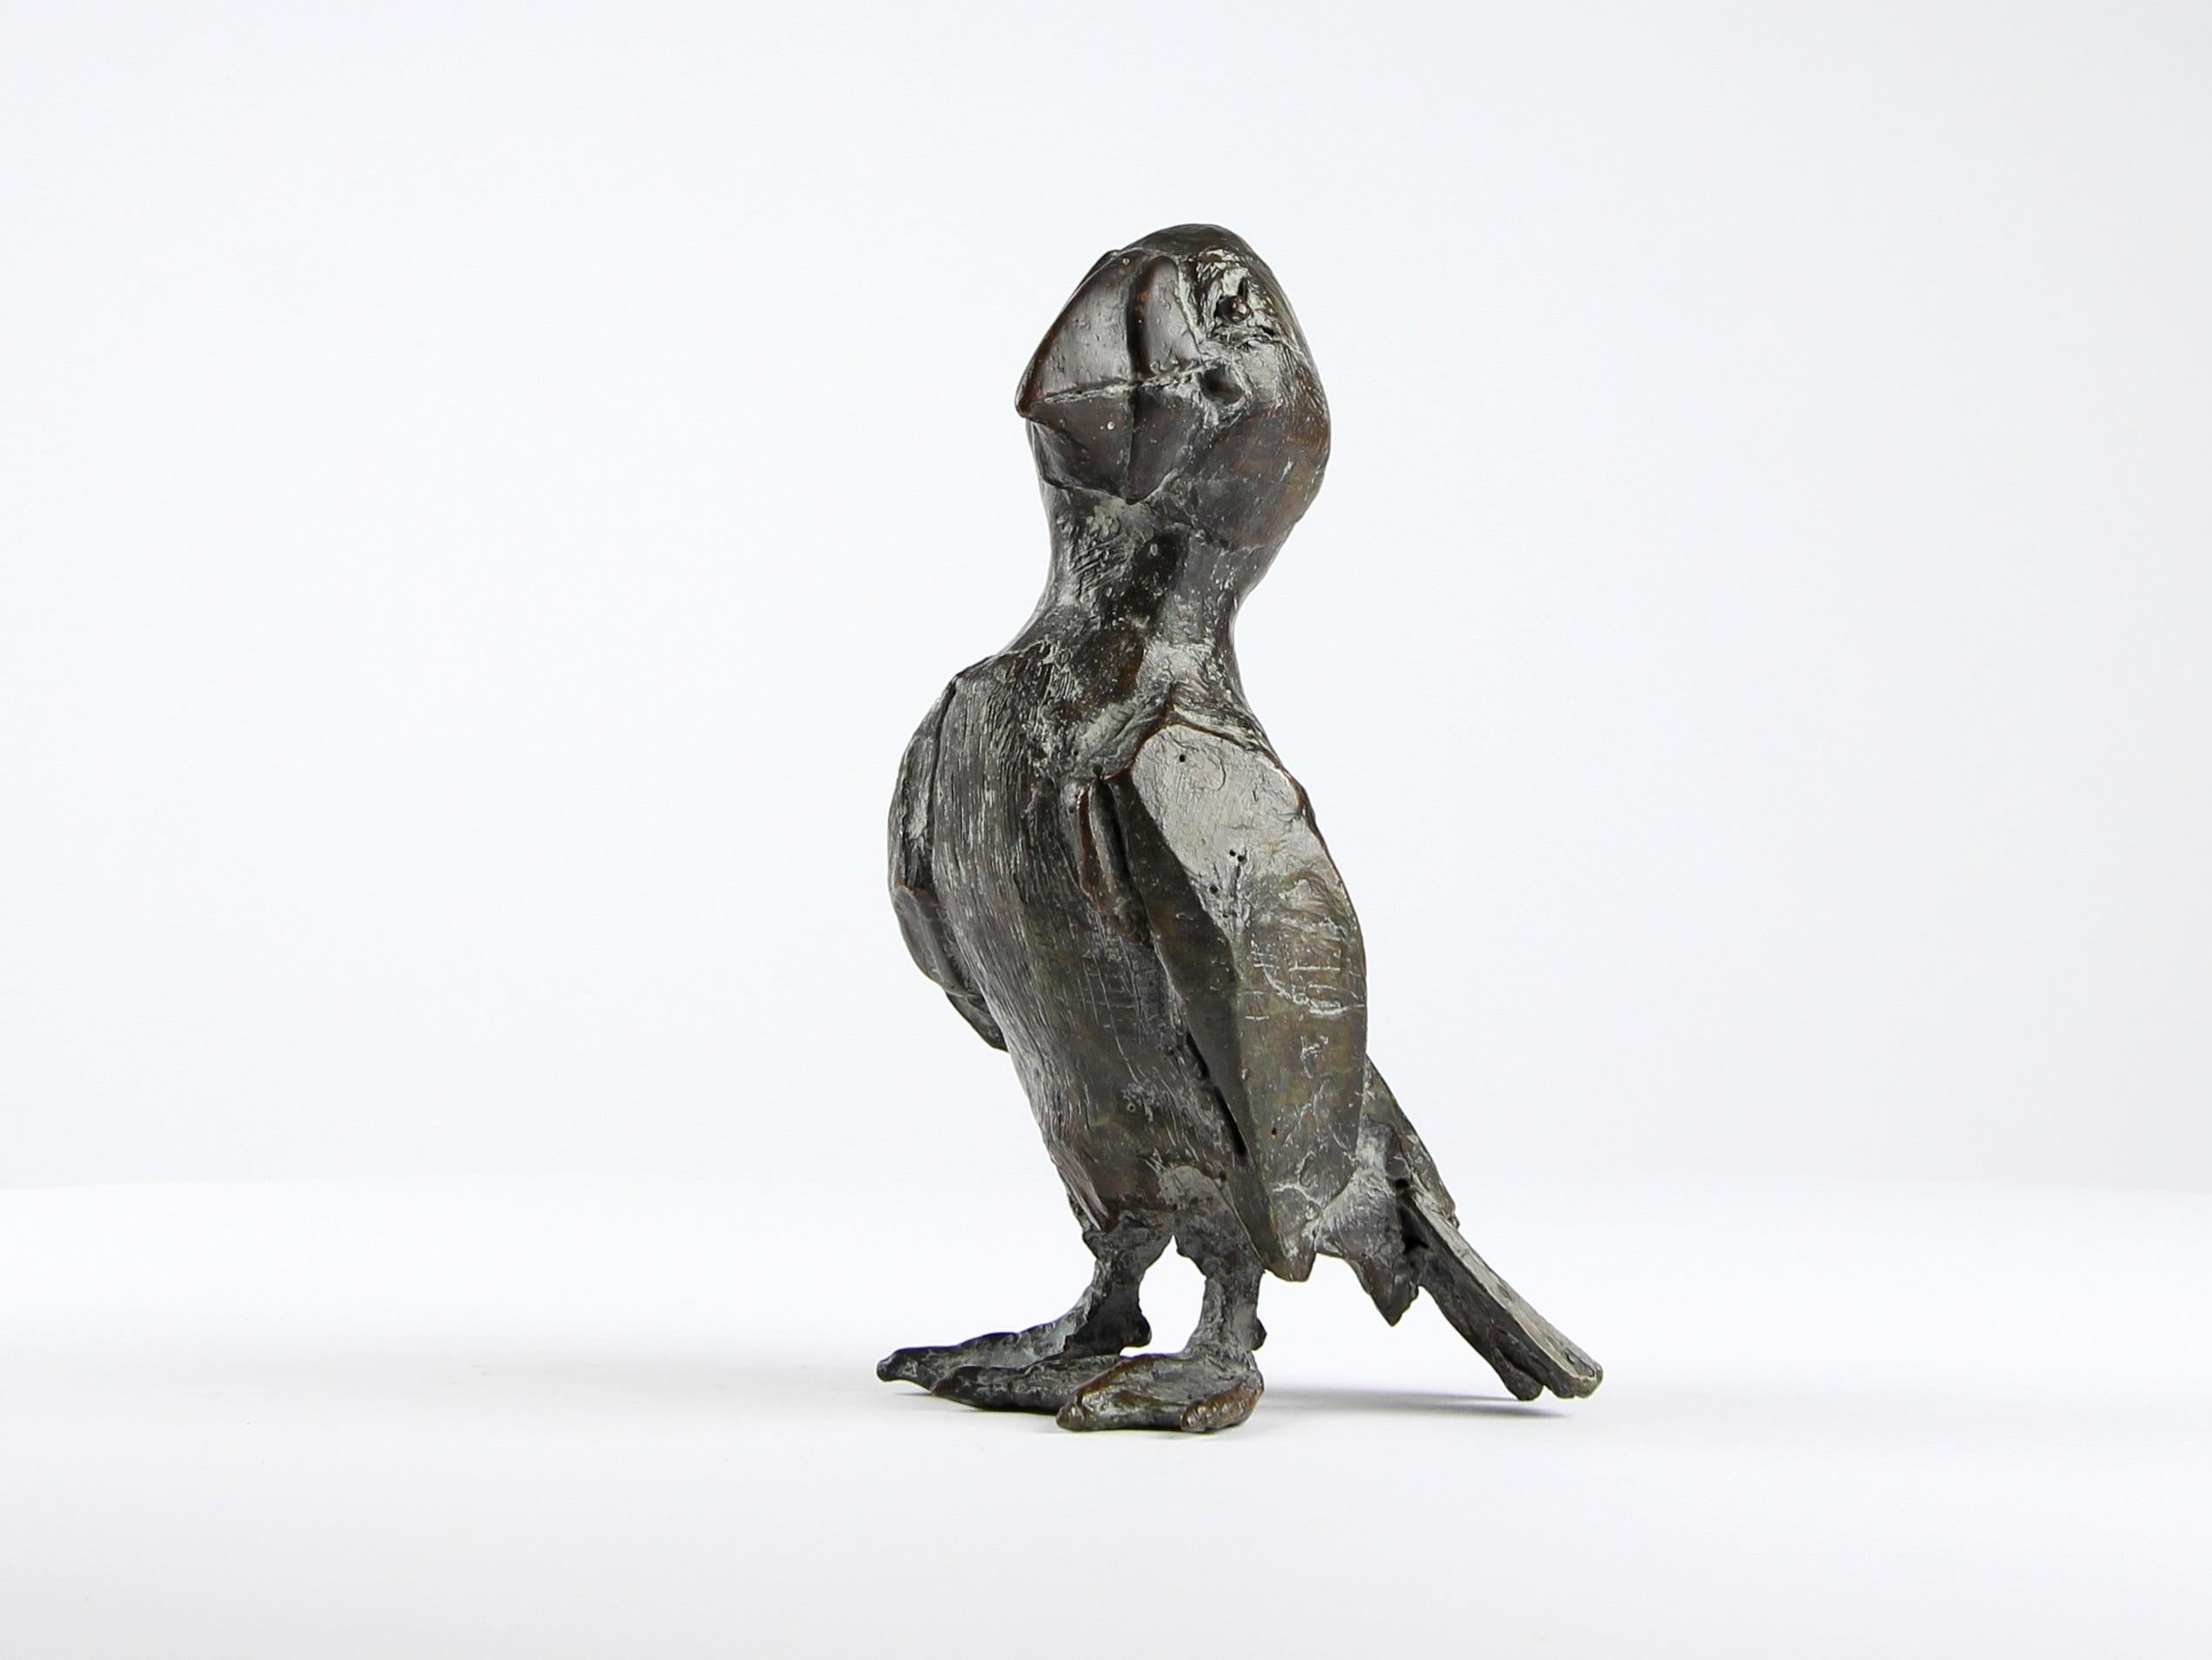 Chésade Figurative Sculpture - Puffin, Bronze Animal Sculpture